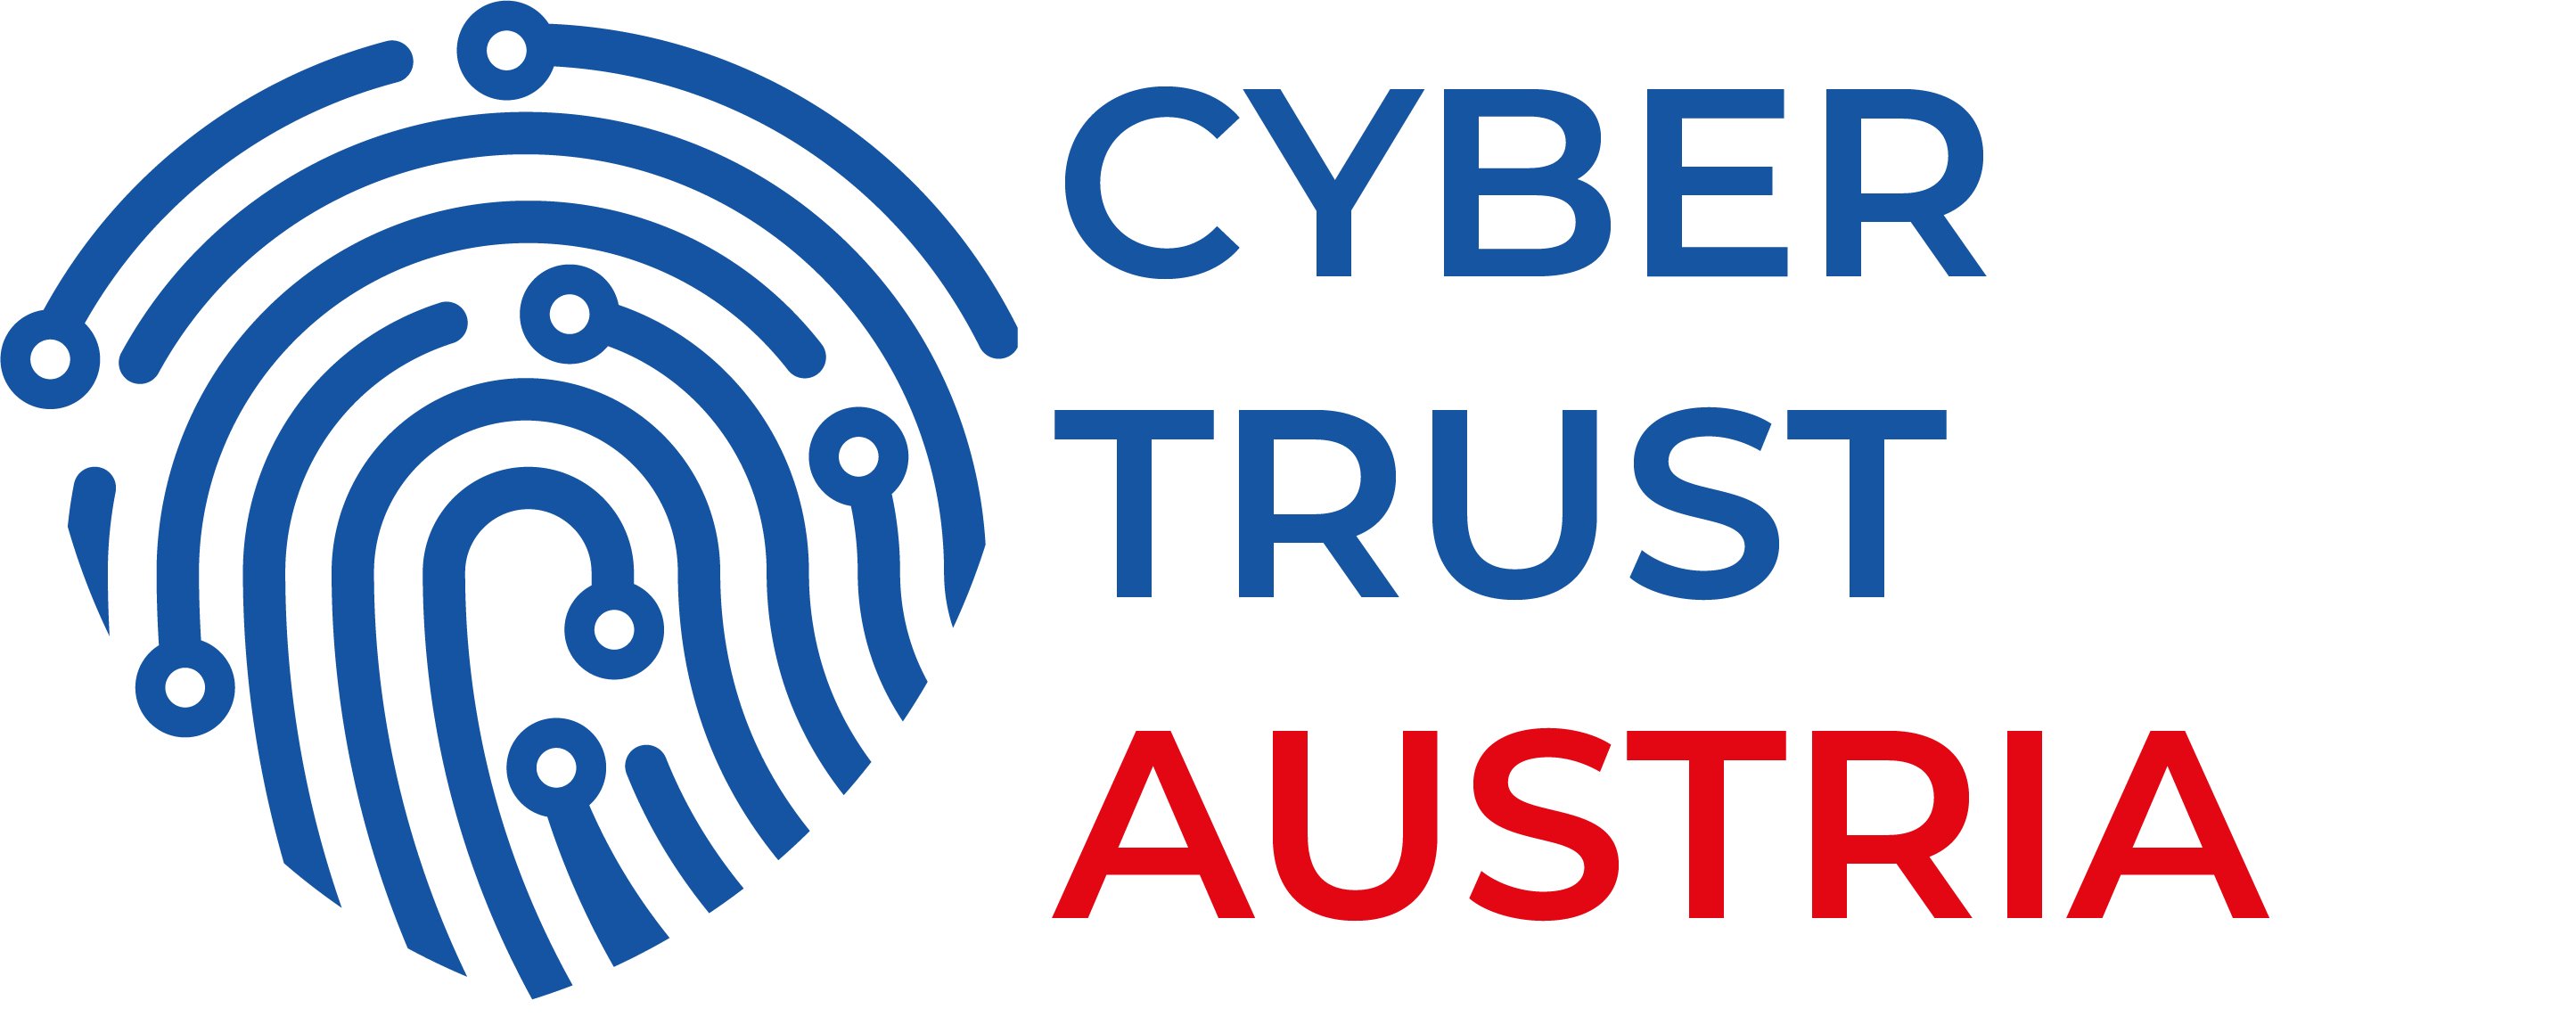 cyber trust austria logo blue